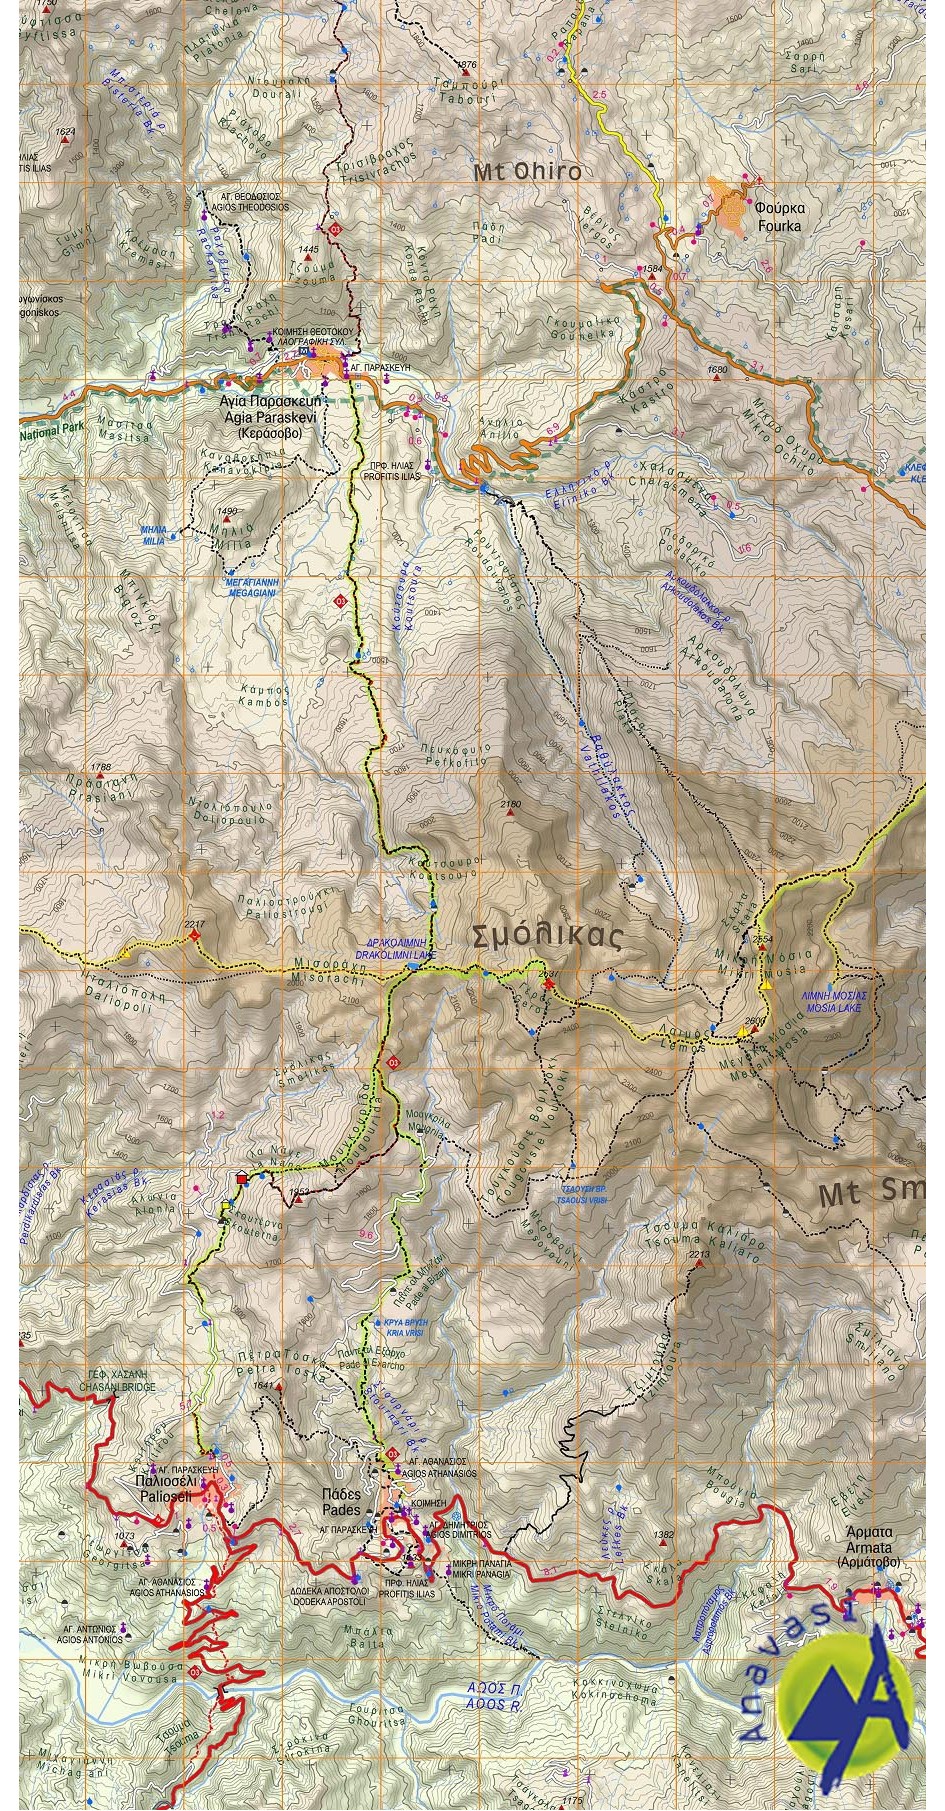 Gramos, Smolikas, Voio, Vasilitsa • Hiking map 1:40 000